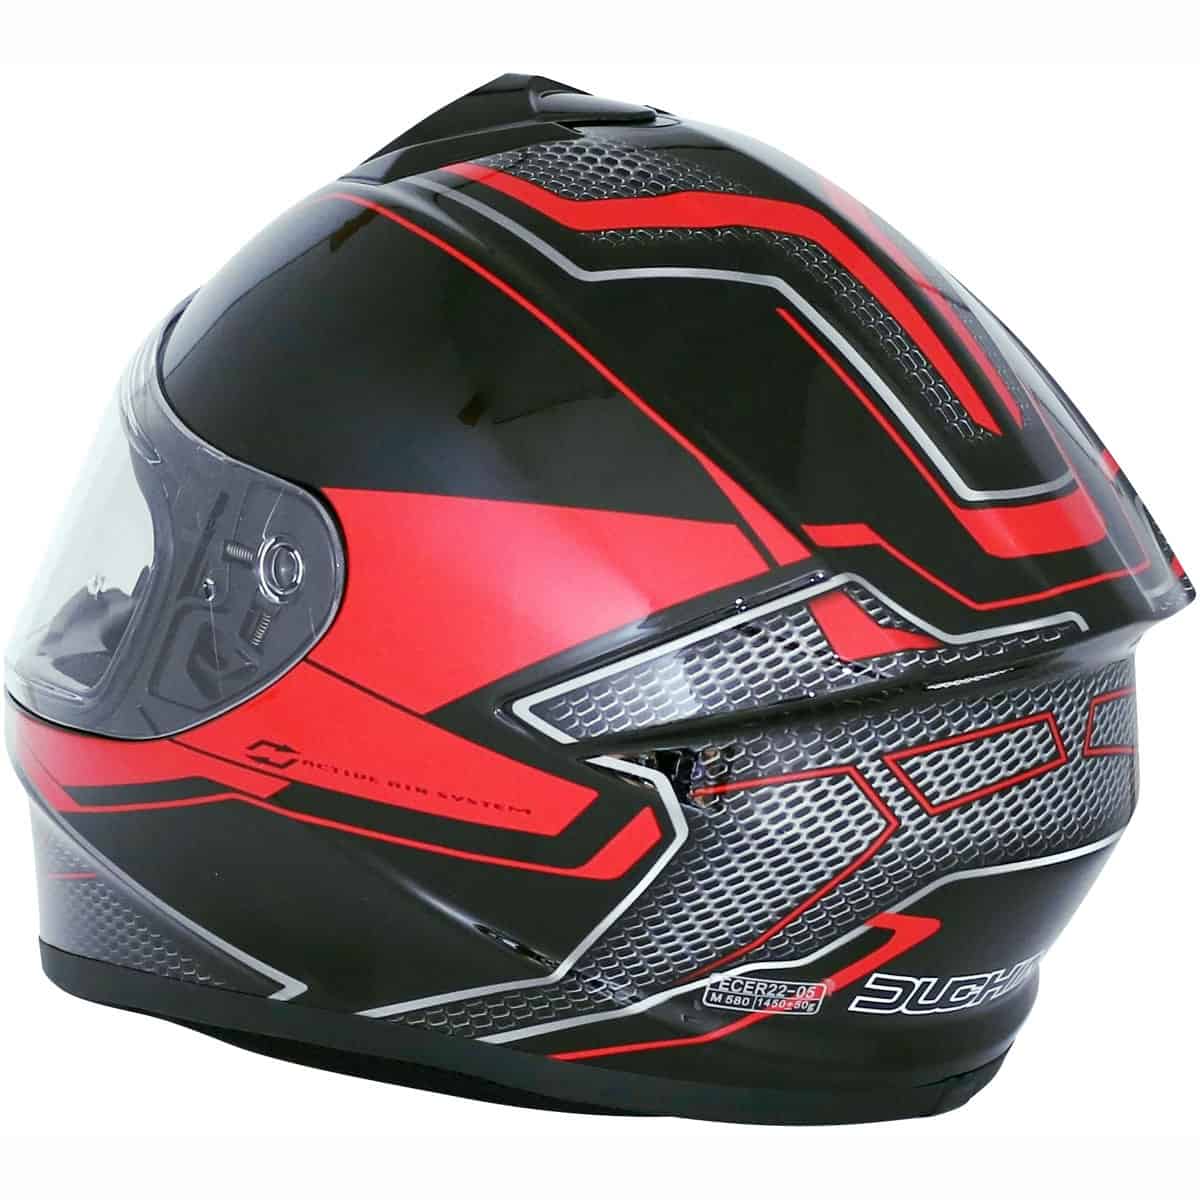 Duchinni D977 Full Face Motorcycle Helmet - Black Red 3